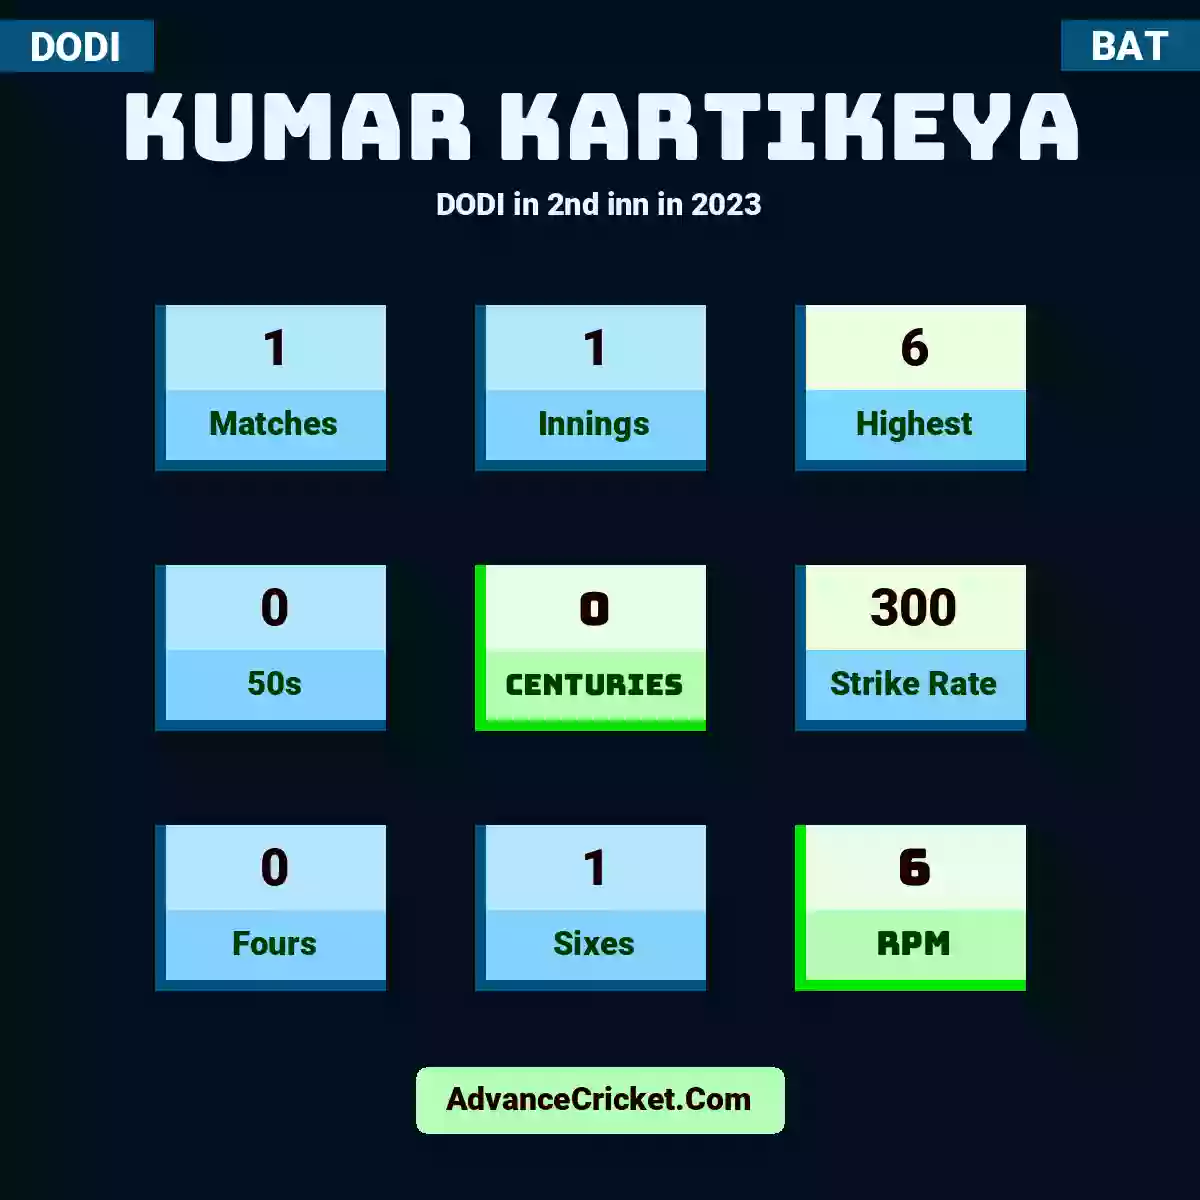 Kumar Kartikeya DODI  in 2nd inn in 2023, Kumar Kartikeya played 1 matches, scored 6 runs as highest, 0 half-centuries, and 0 centuries, with a strike rate of 300. K.Kartikeya hit 0 fours and 1 sixes, with an RPM of 6.